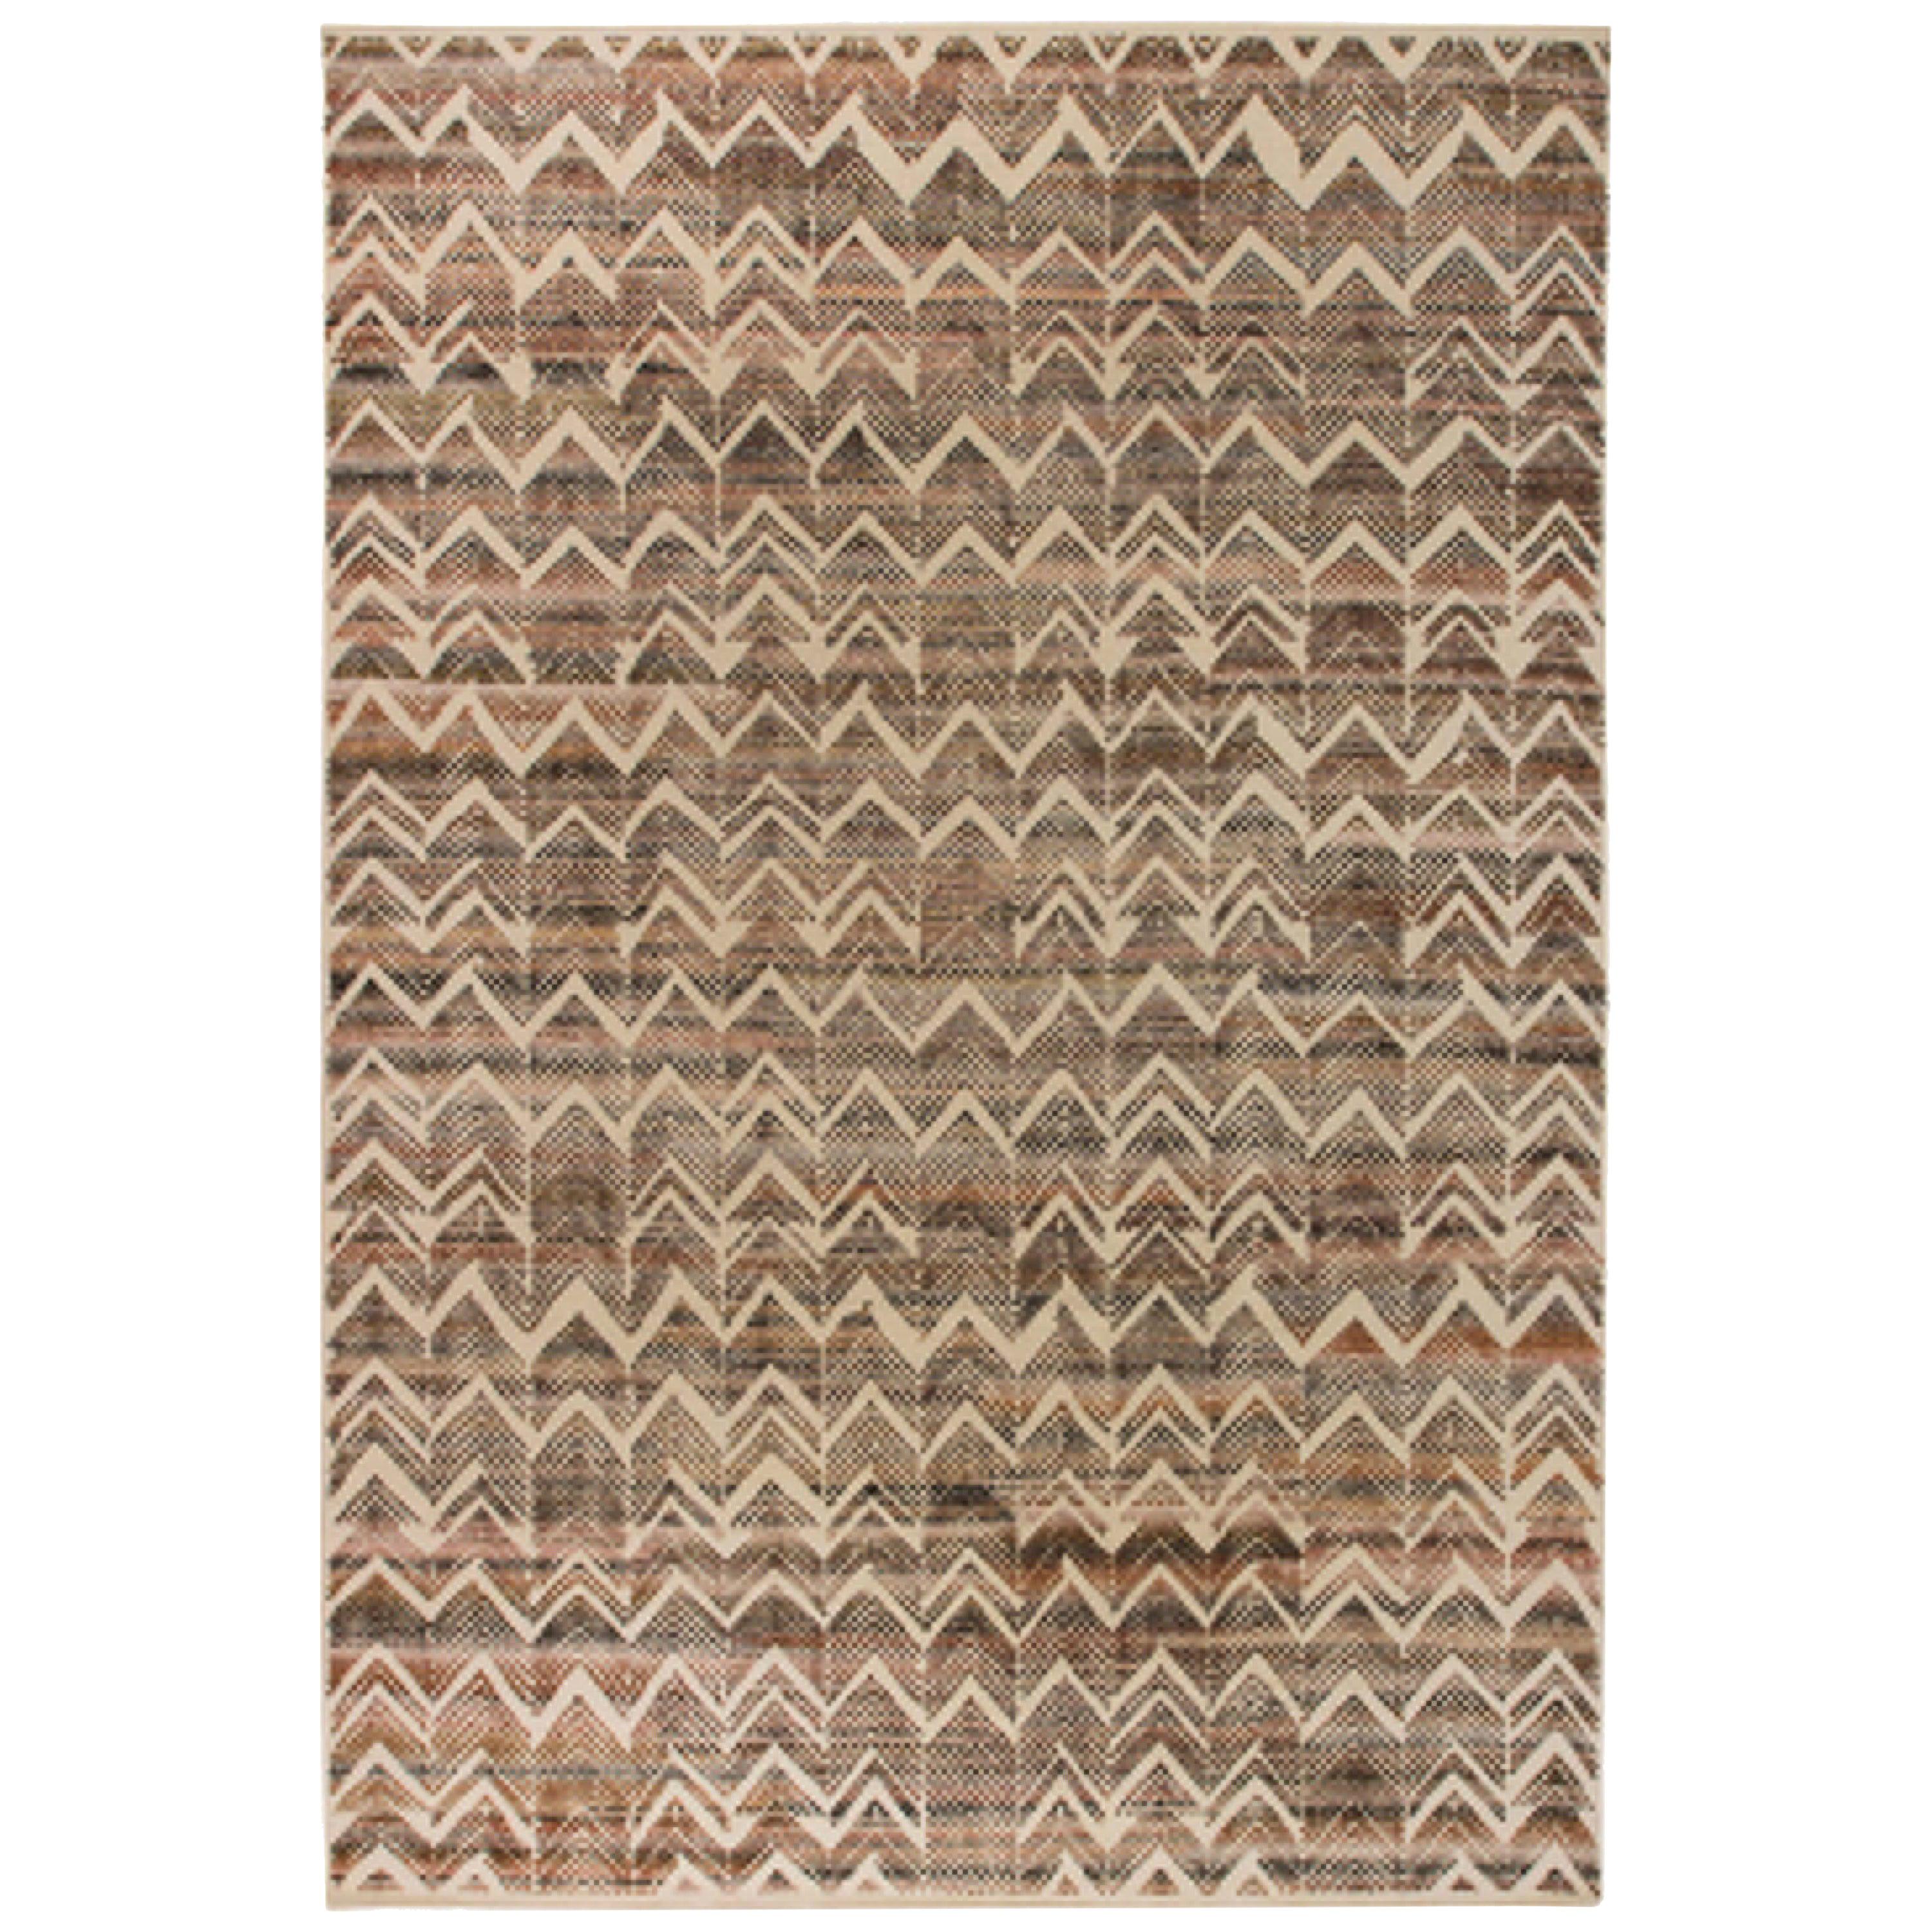 Brown Abstract Textured Chevron Rug, Chevron Rug 8×10